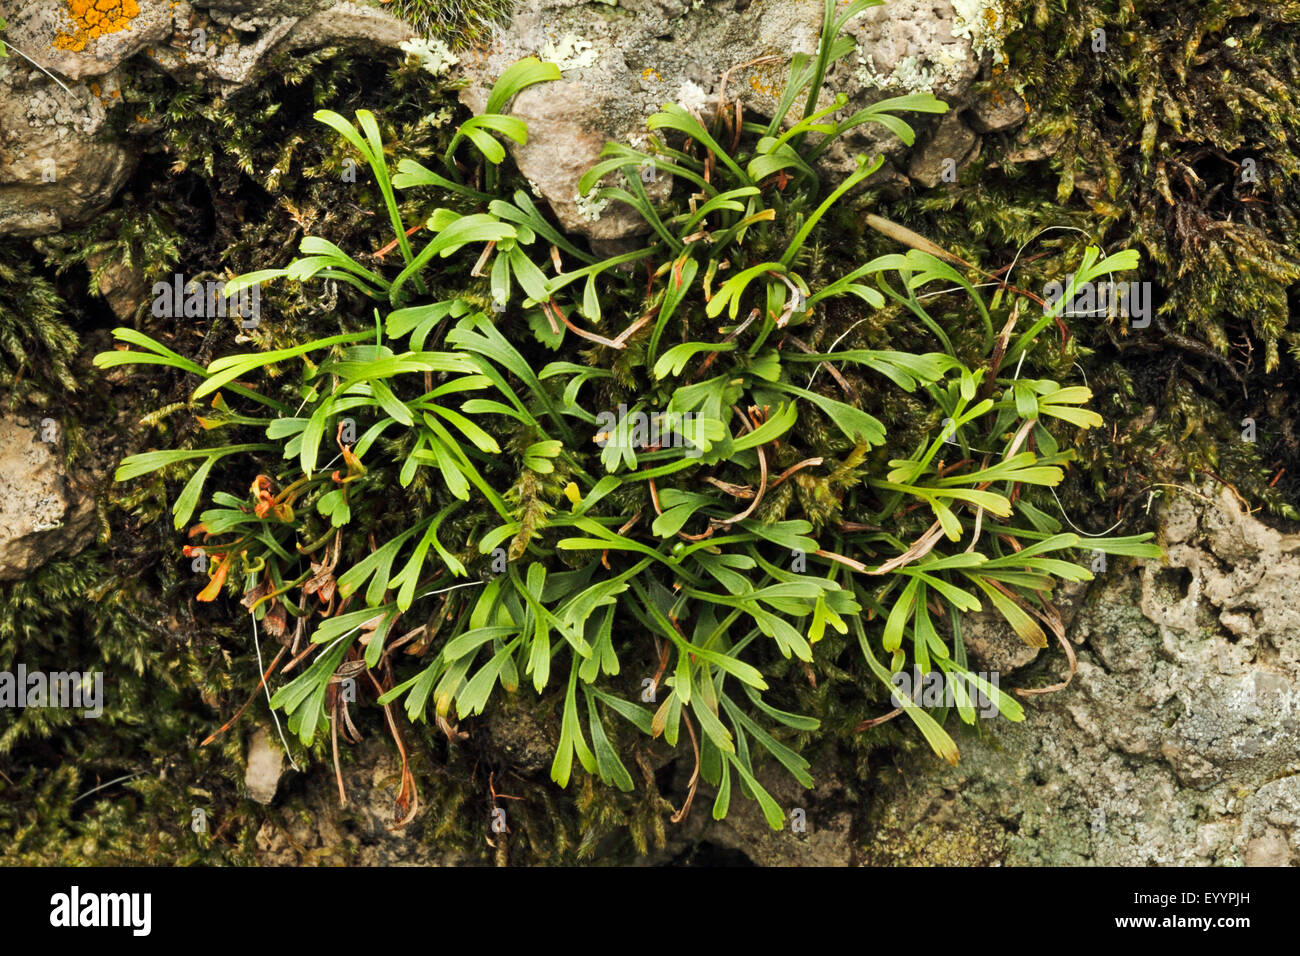 Northern spleenwort, Forked spleenwort (Asplenium septentrionale), in a rock crevice, Germany Stock Photo